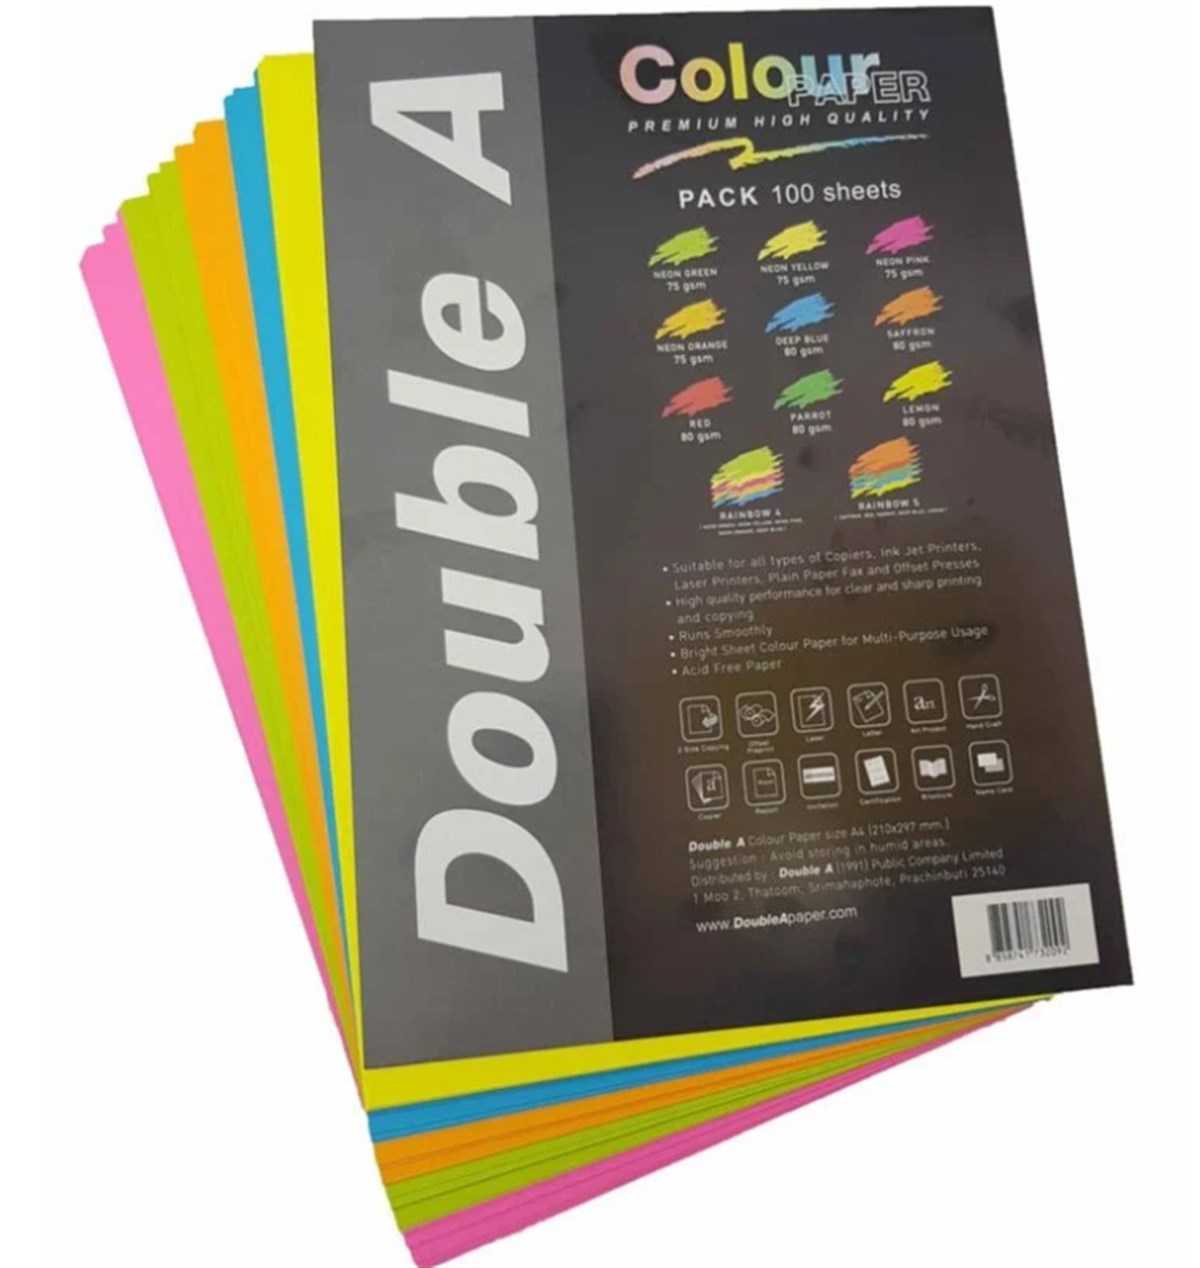 Double-A Renkli Fotokopi Kağıdı 75 gr A4 Fosforlu 5 Renk - 100 Adet